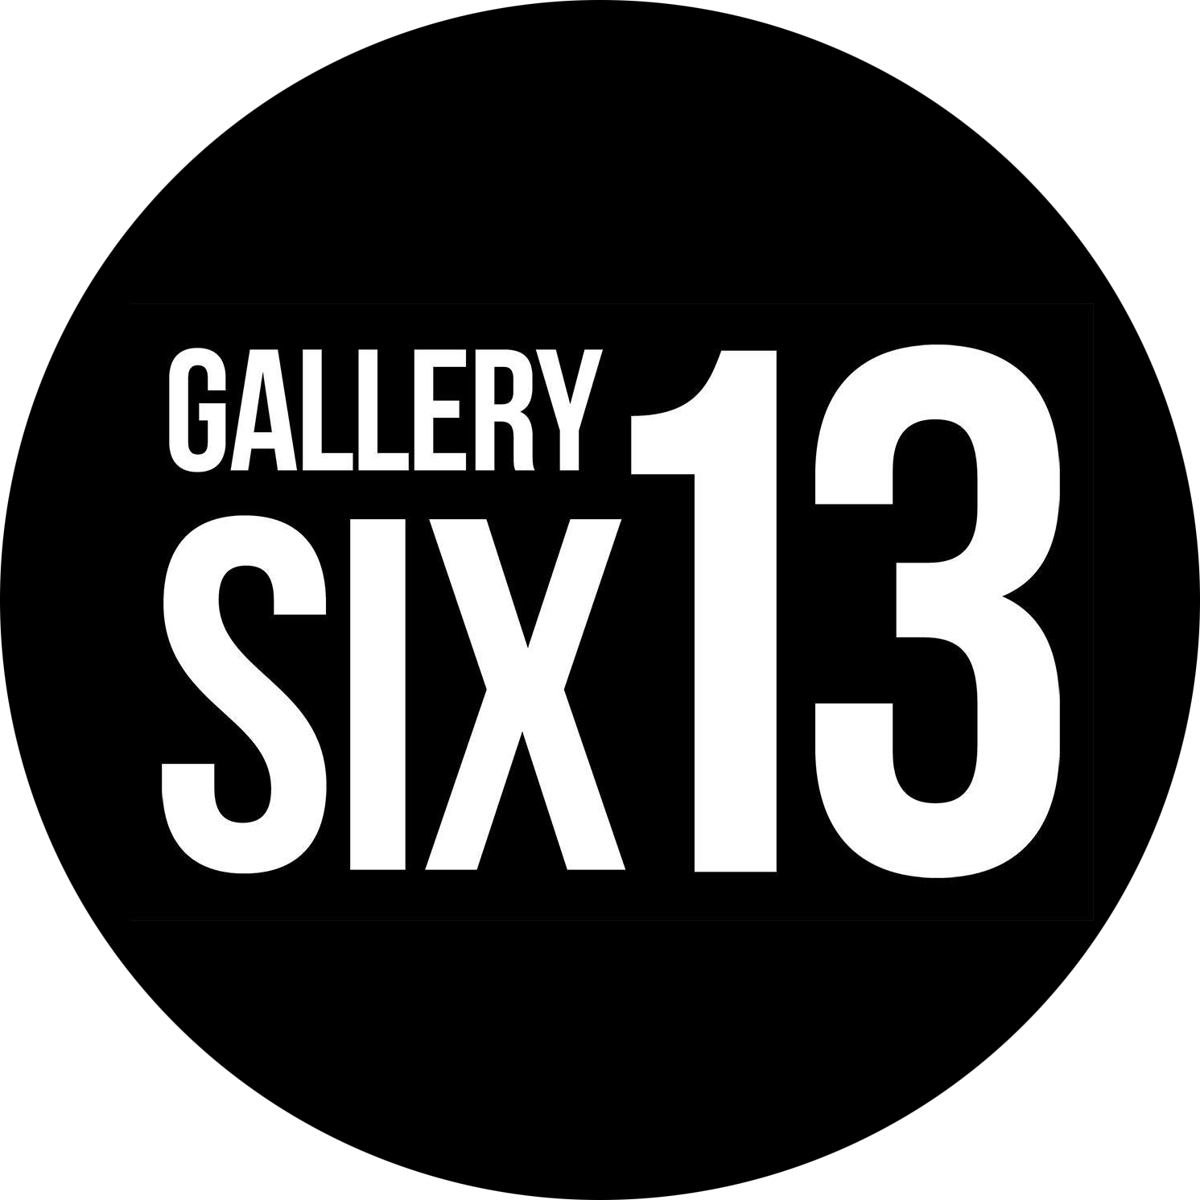 GallerySix13